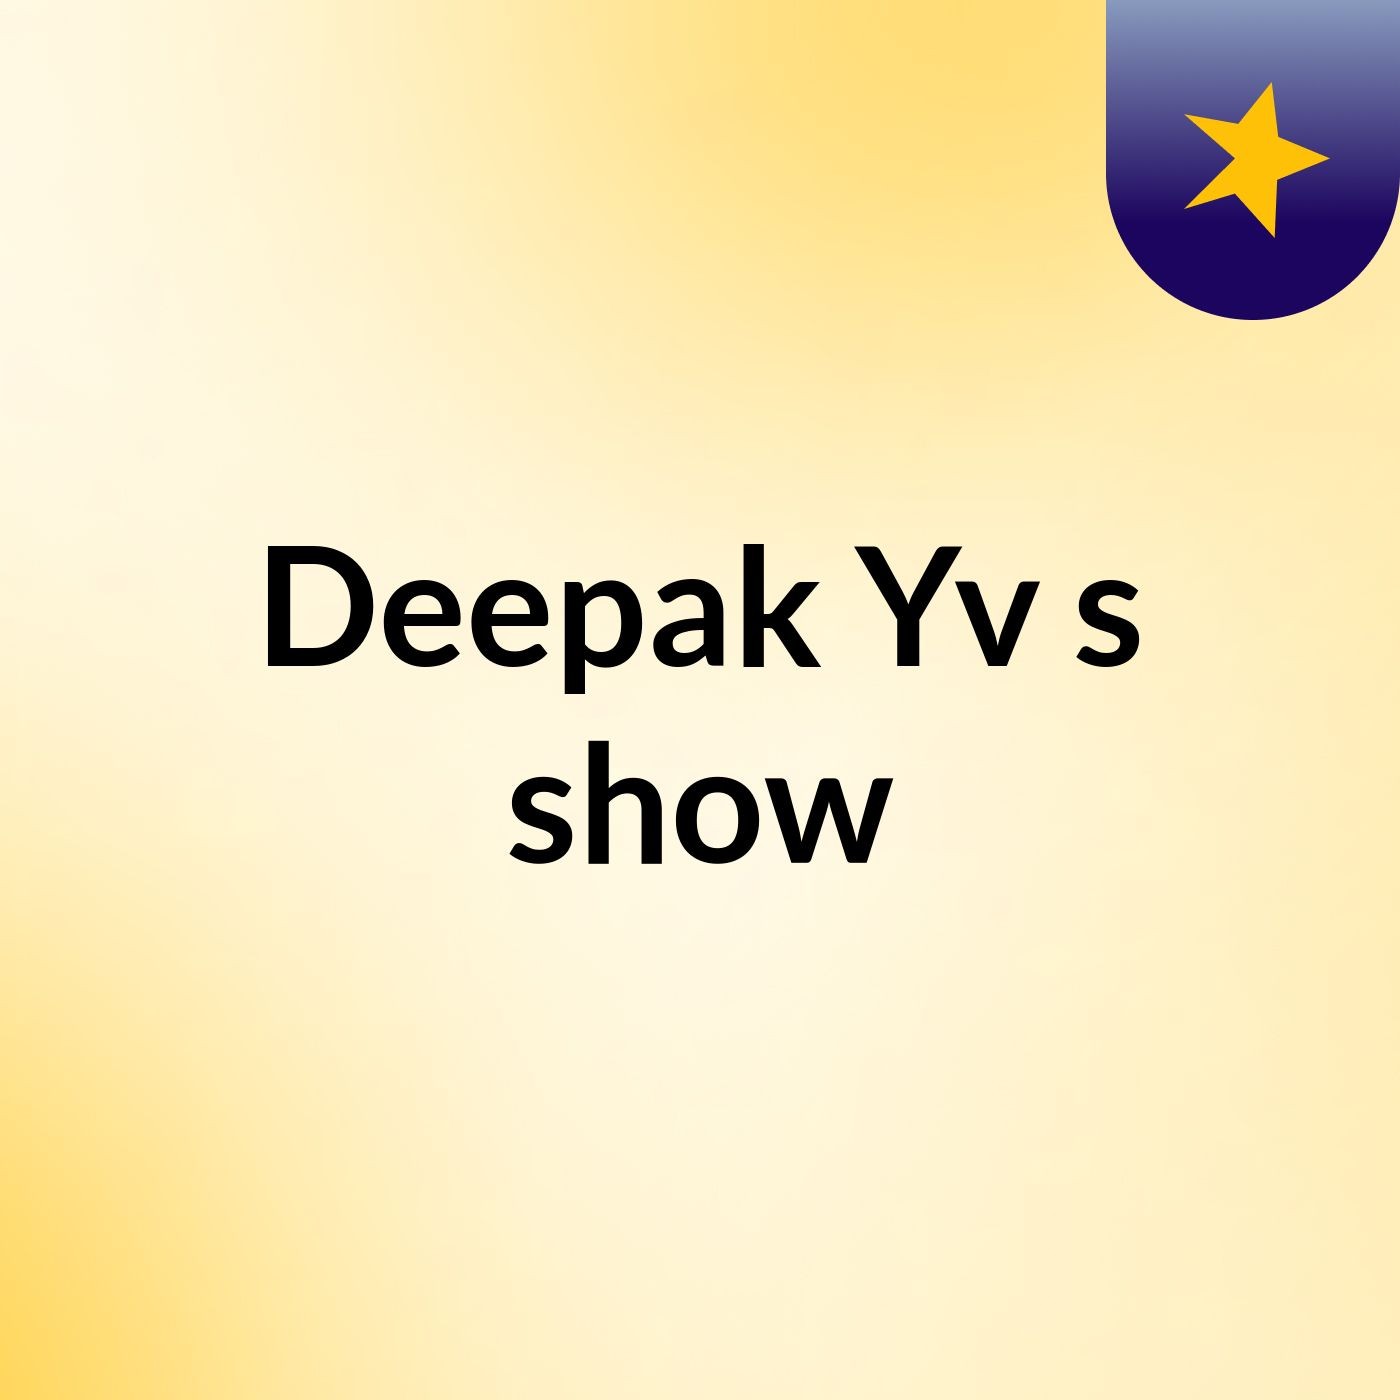 Deepak Yv's show:Deepak Yv